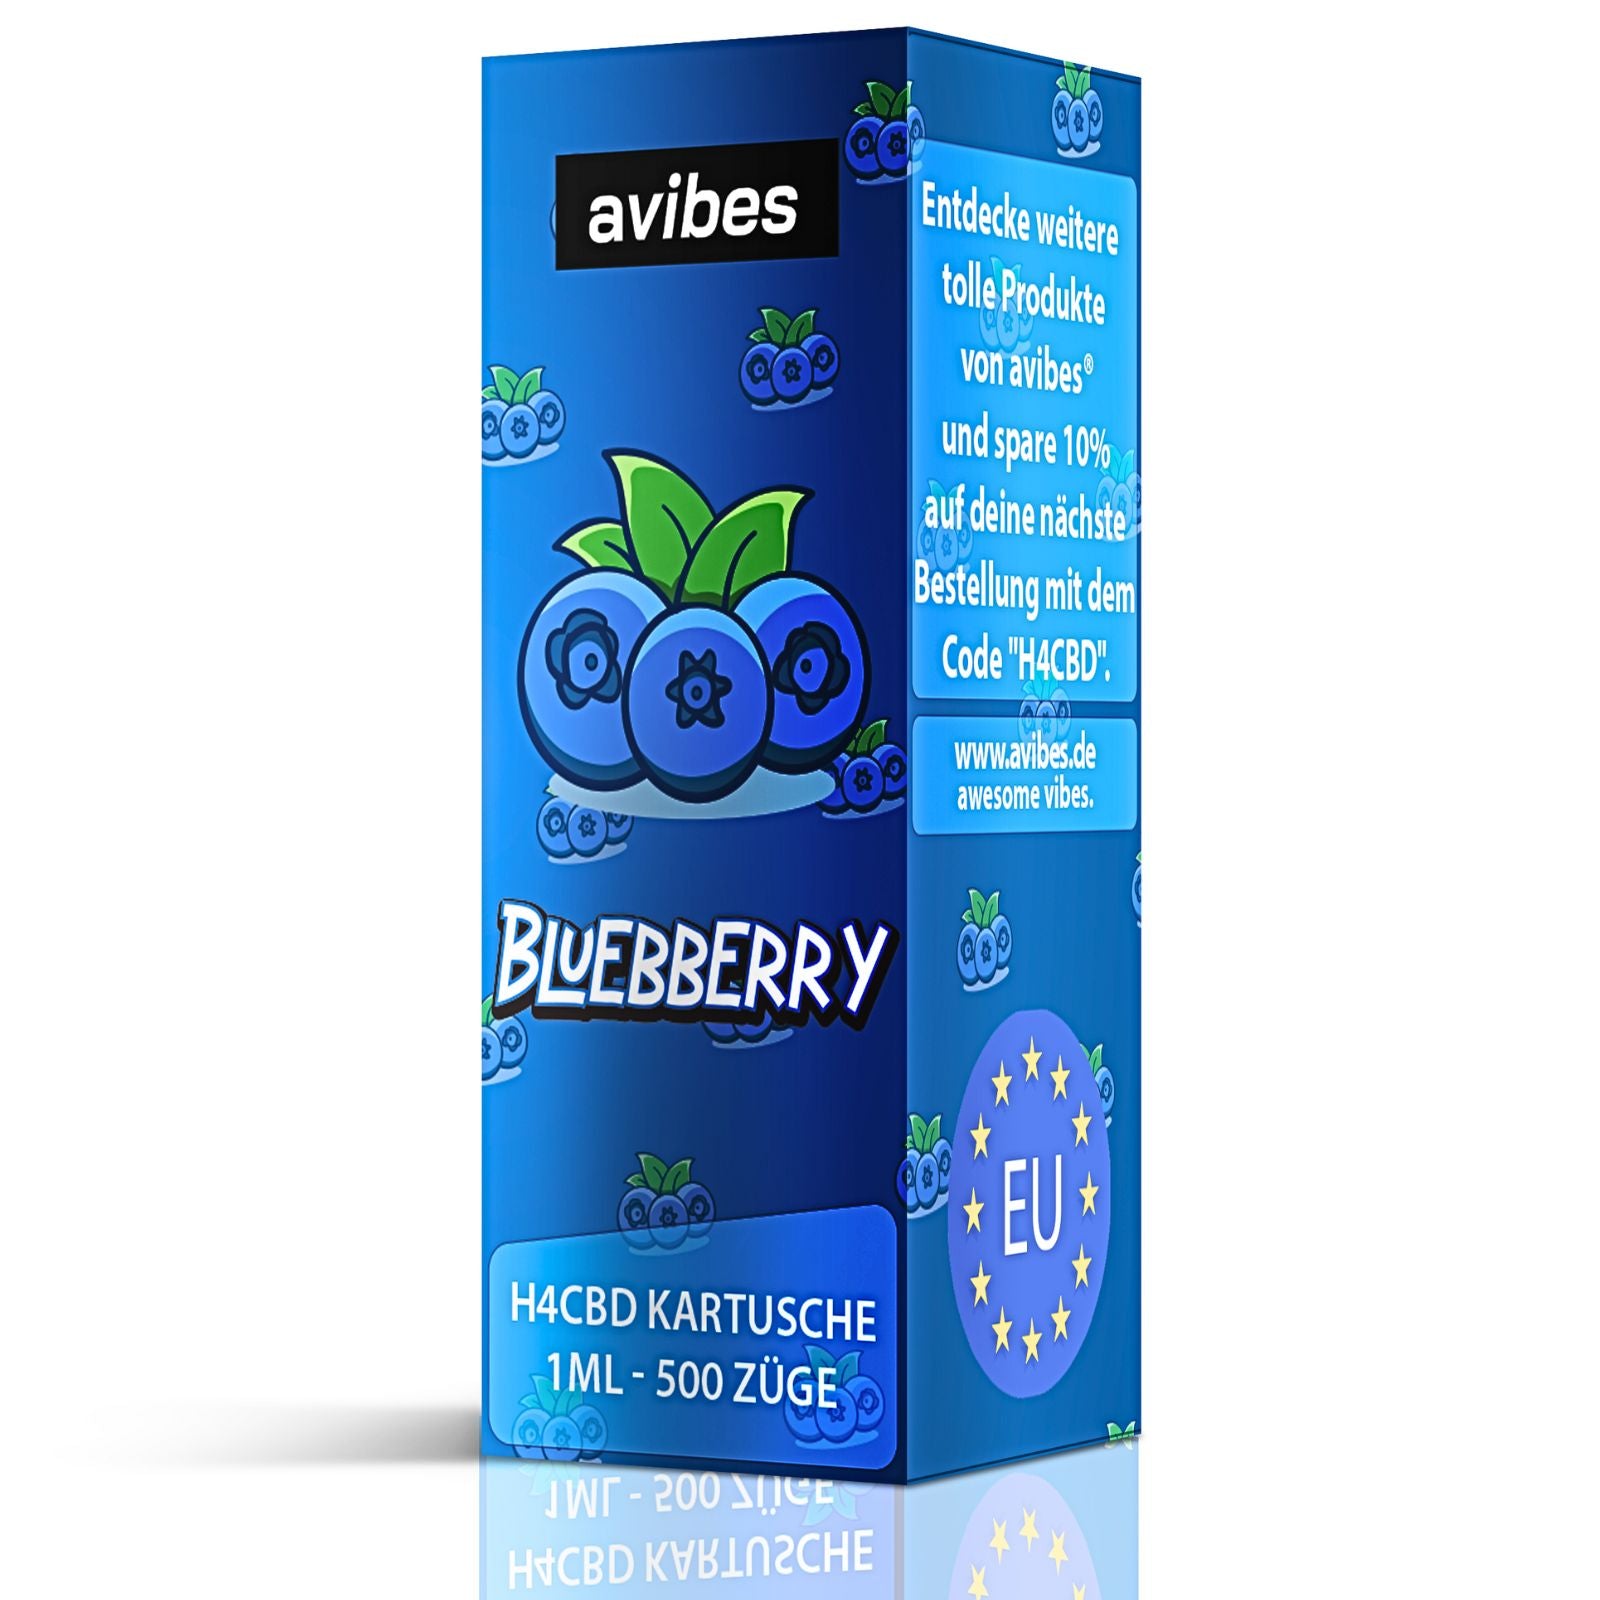 avibes h4cbd kartusche 1ml blueberry